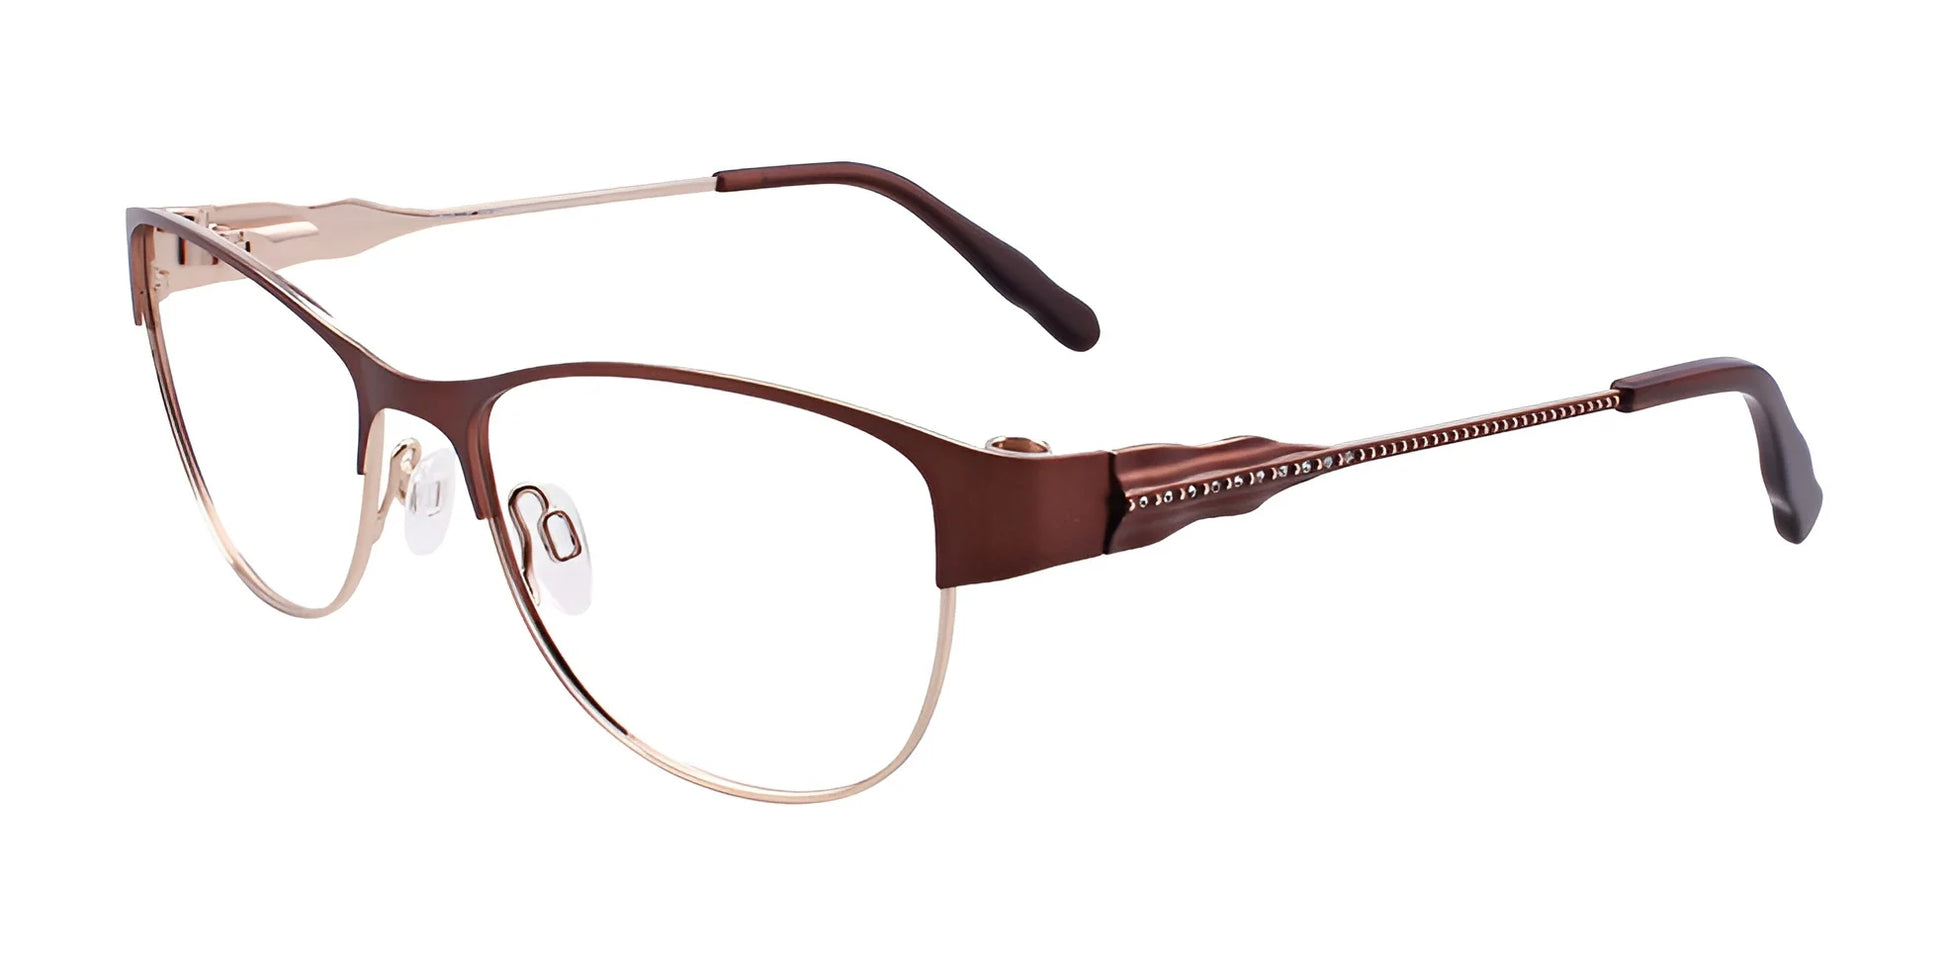 EasyClip EC405 Eyeglasses Satin Brown & Shiny Gold / Kit With Both Clips